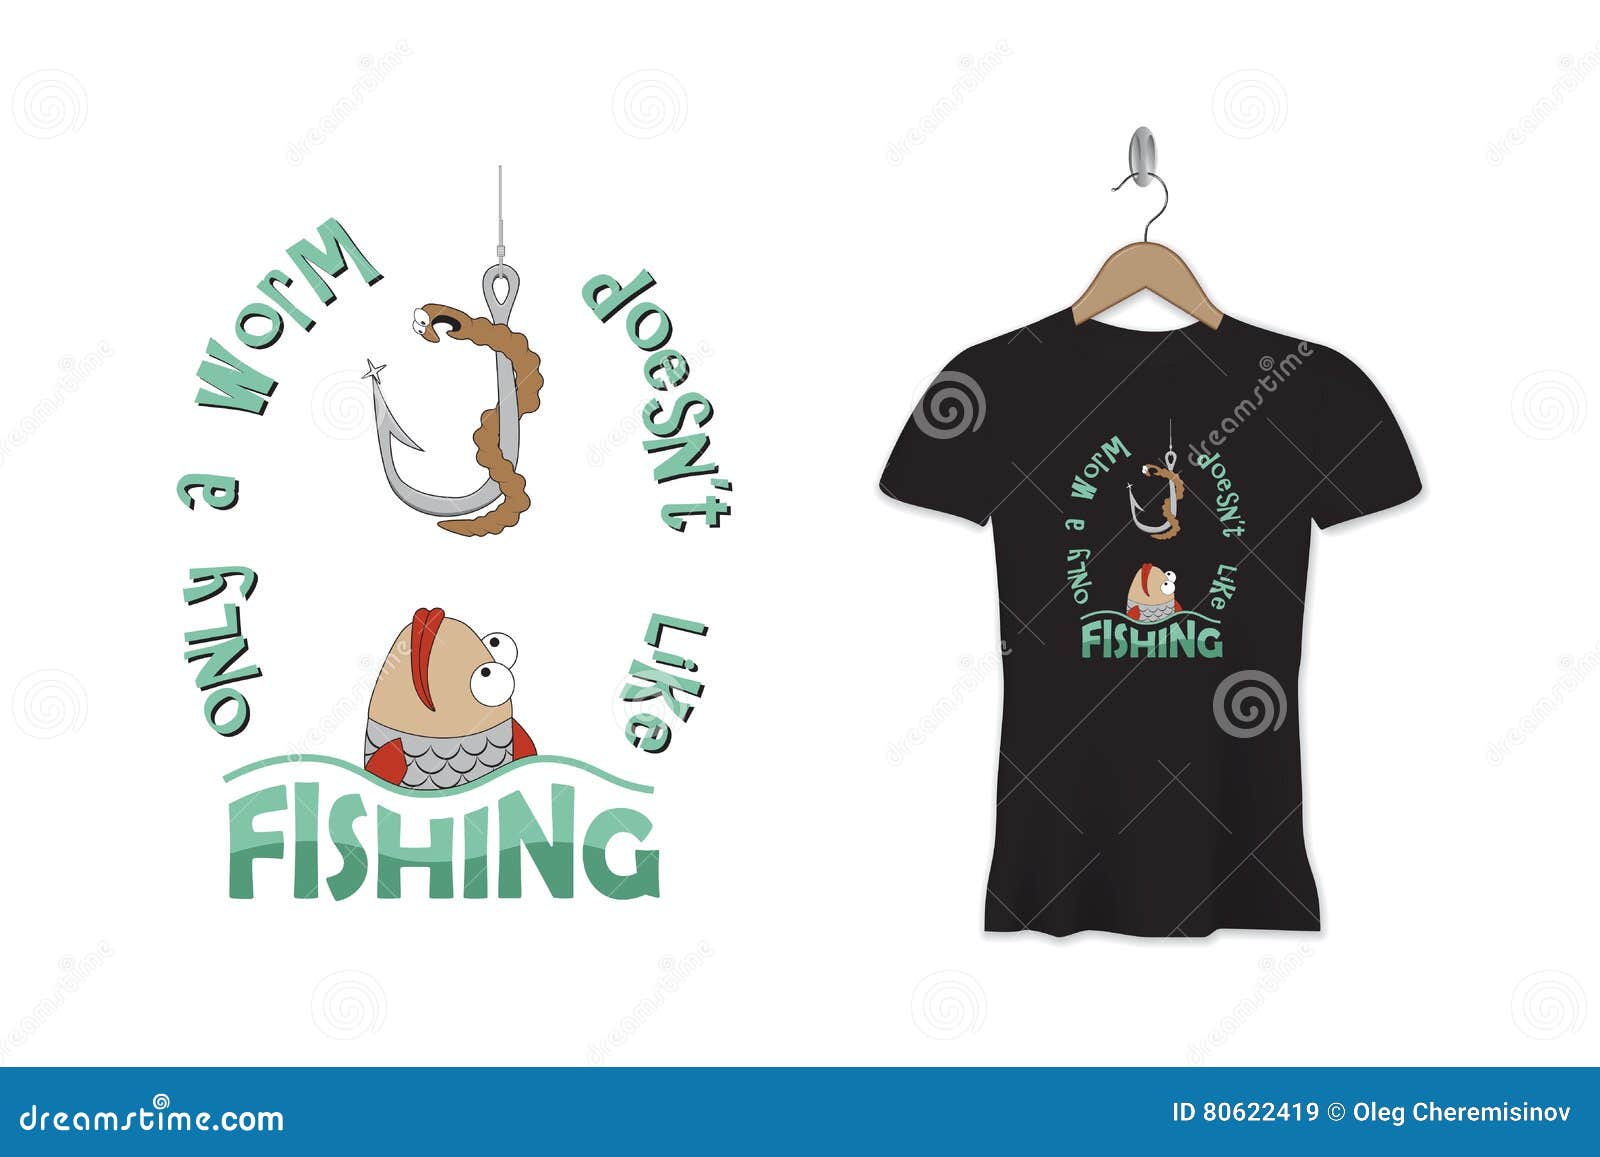 https://thumbs.dreamstime.com/z/funny-fishing-t-shirt-print-sticker-design-vector-template-worm-fish-text-80622419.jpg